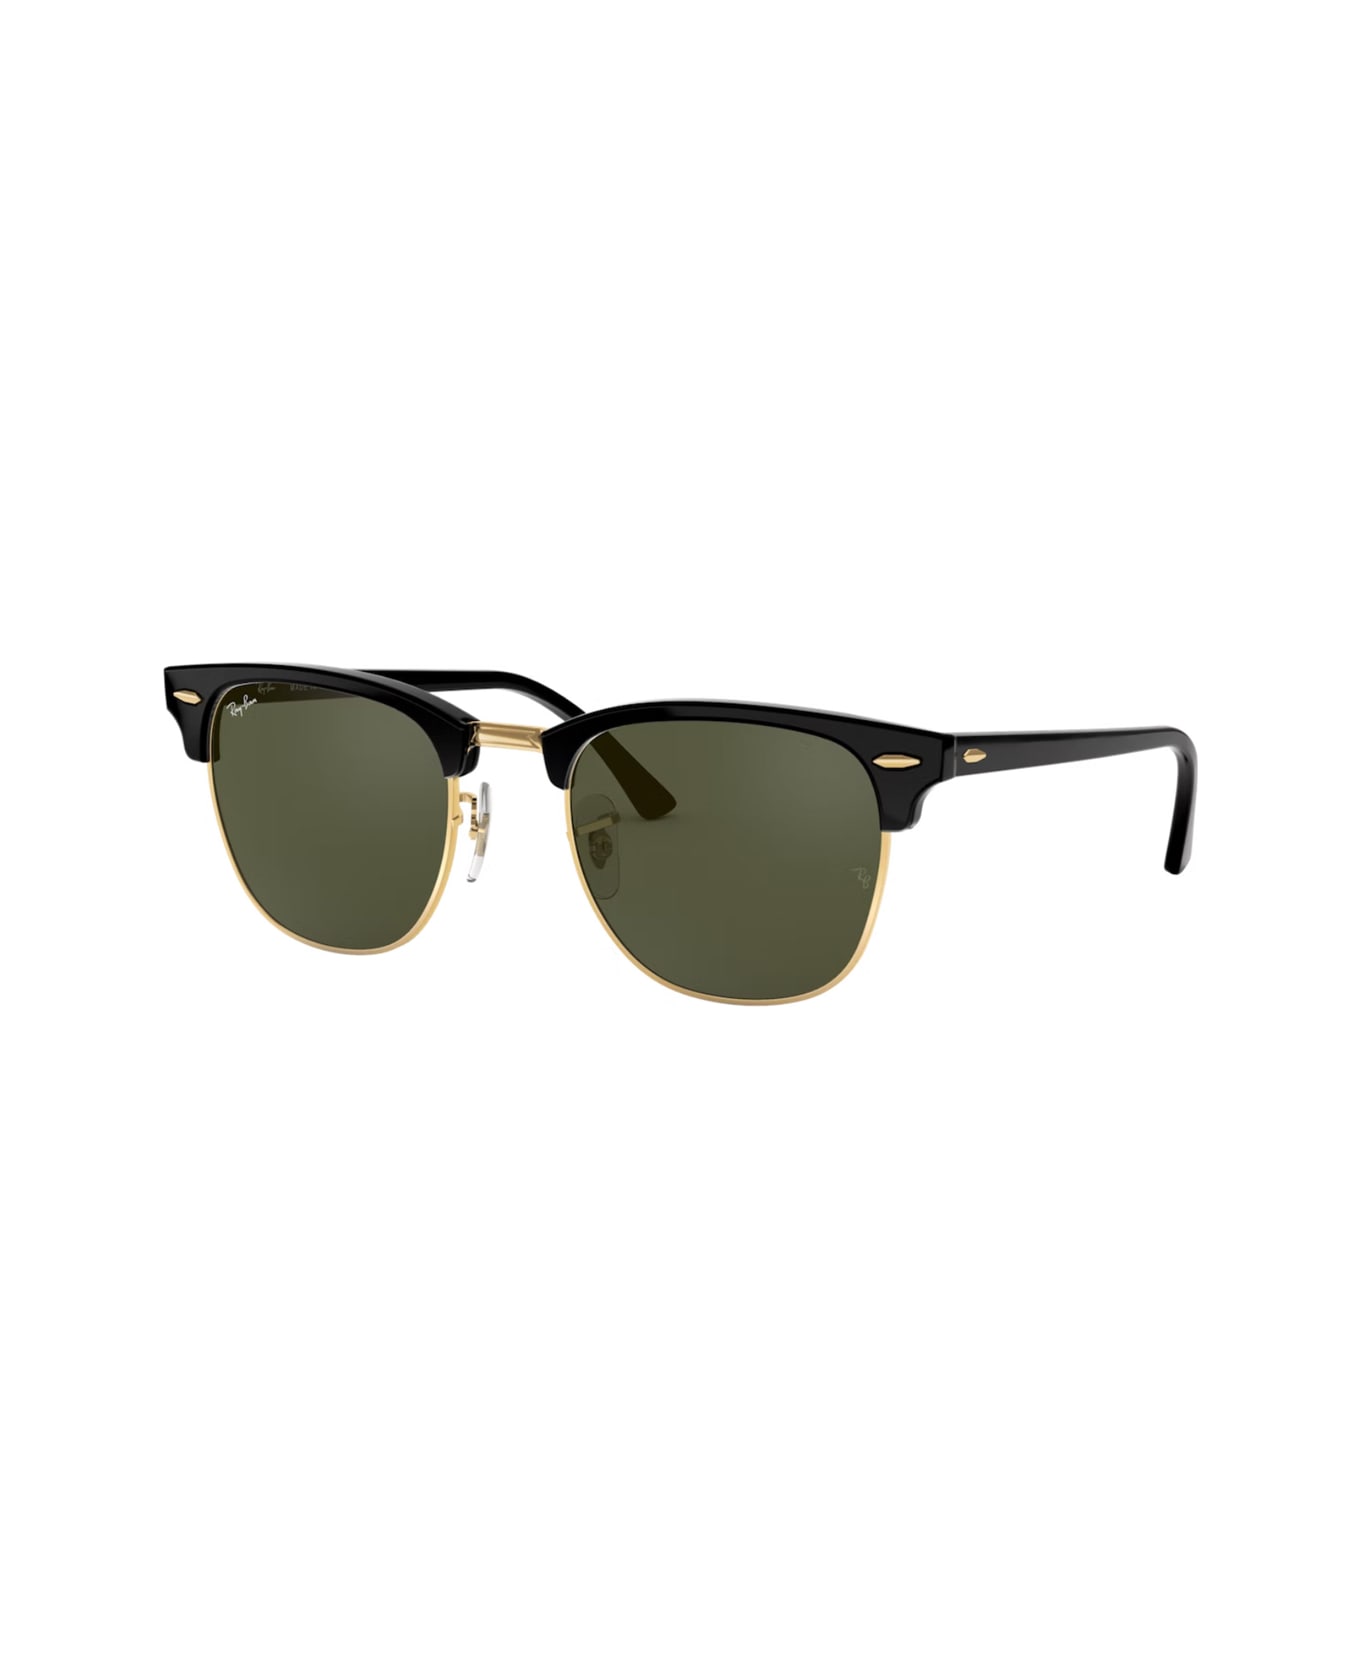 Ray-Ban Rb3016 - Clubmaster Sole W0365 Sunglasses - Nero サングラス